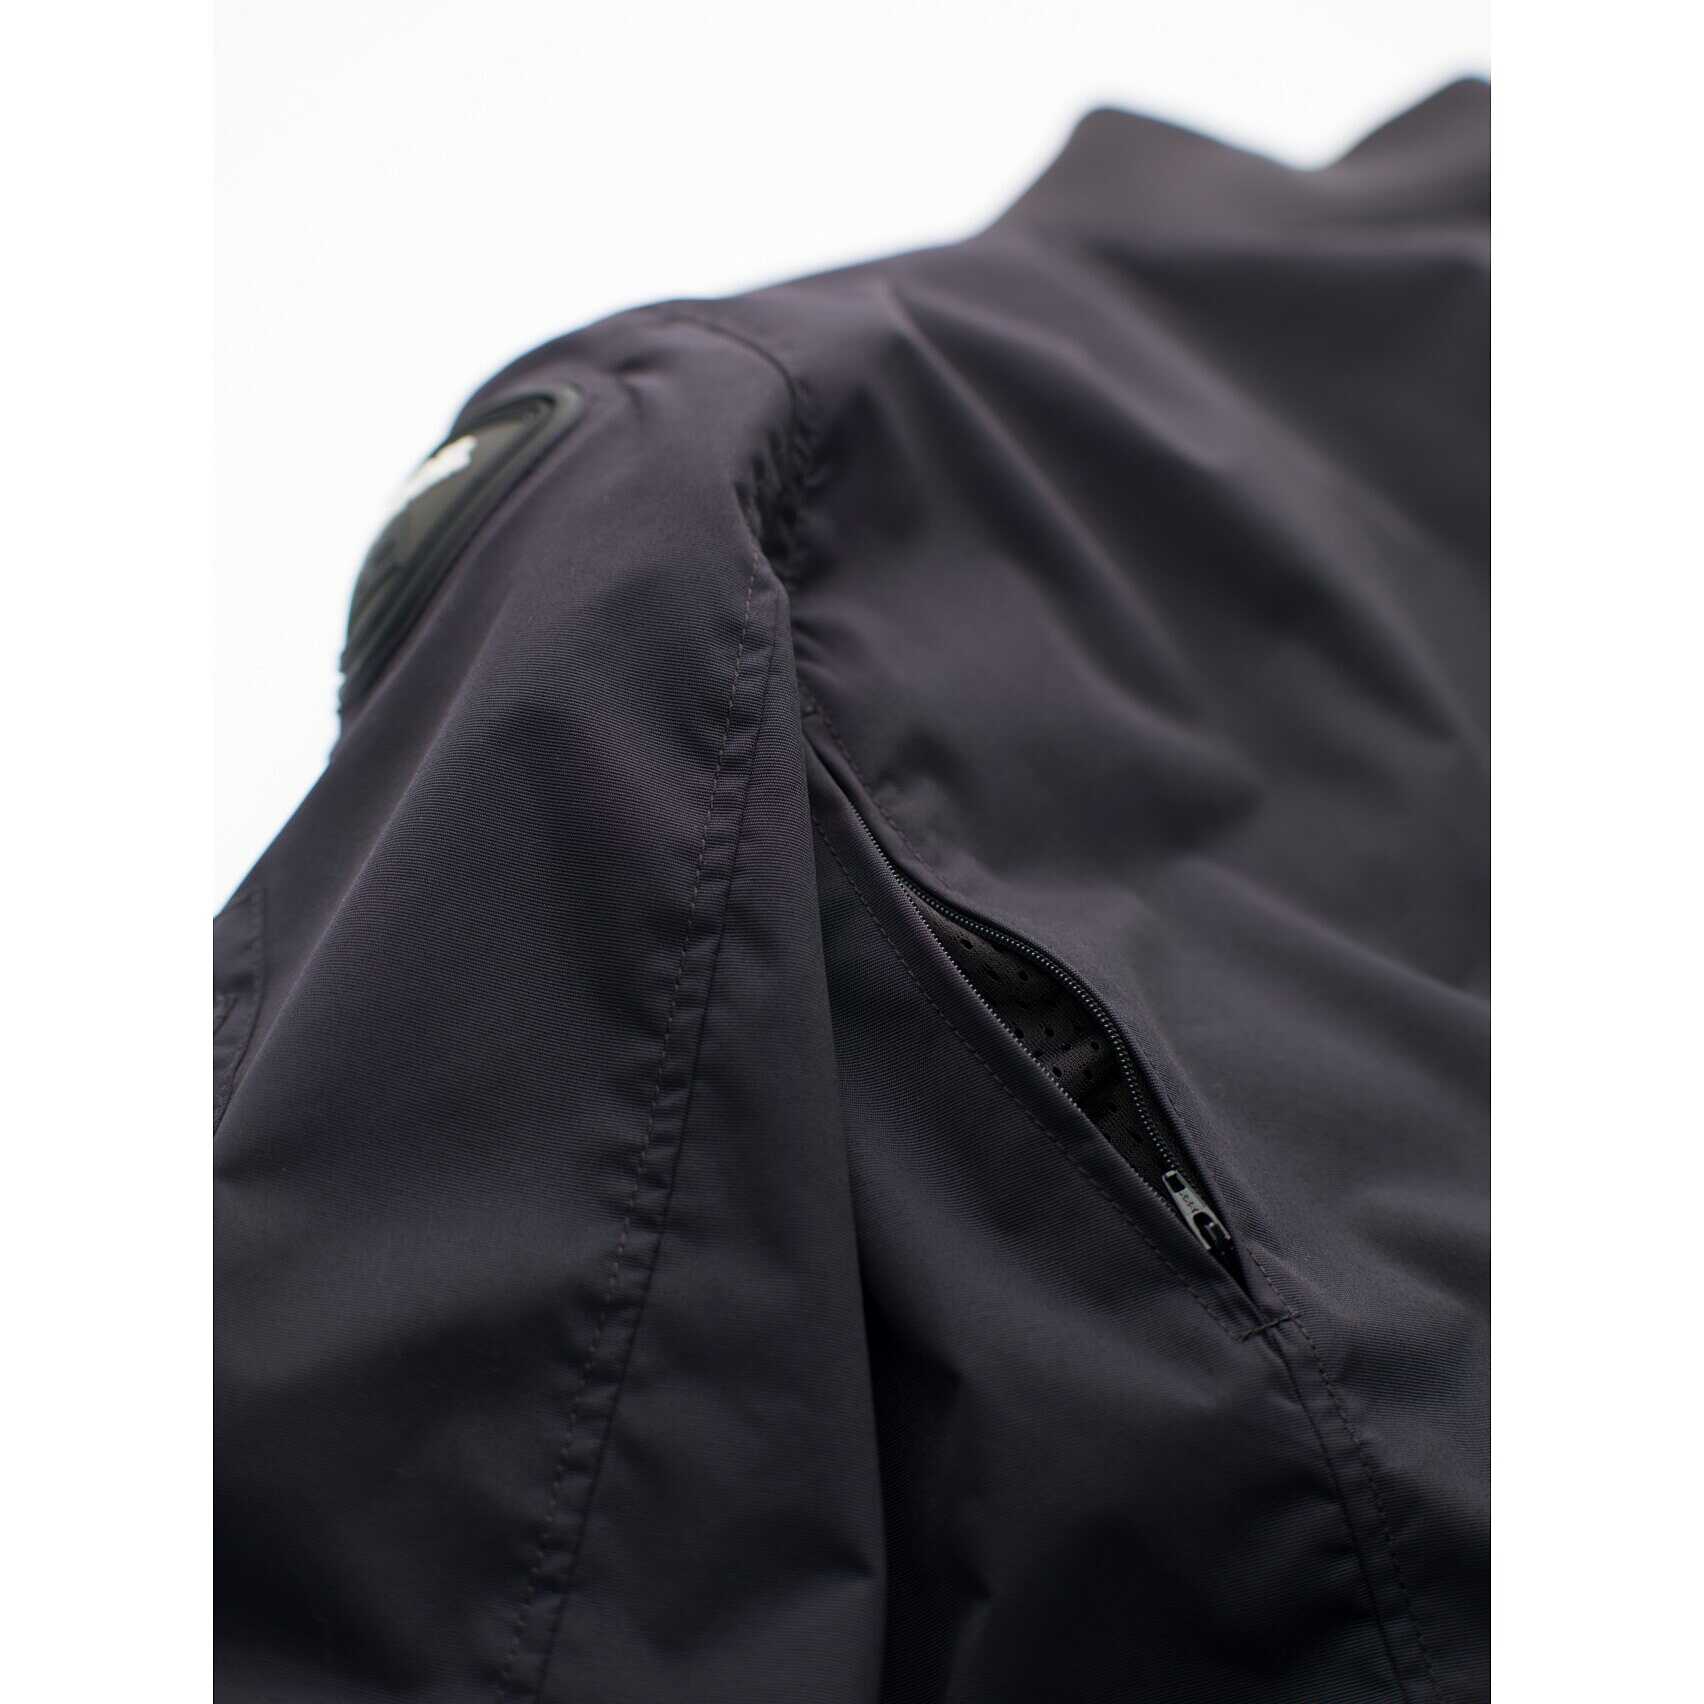 Men's luxury jacket - Philipp Plein bomber in black leather and gray fabric